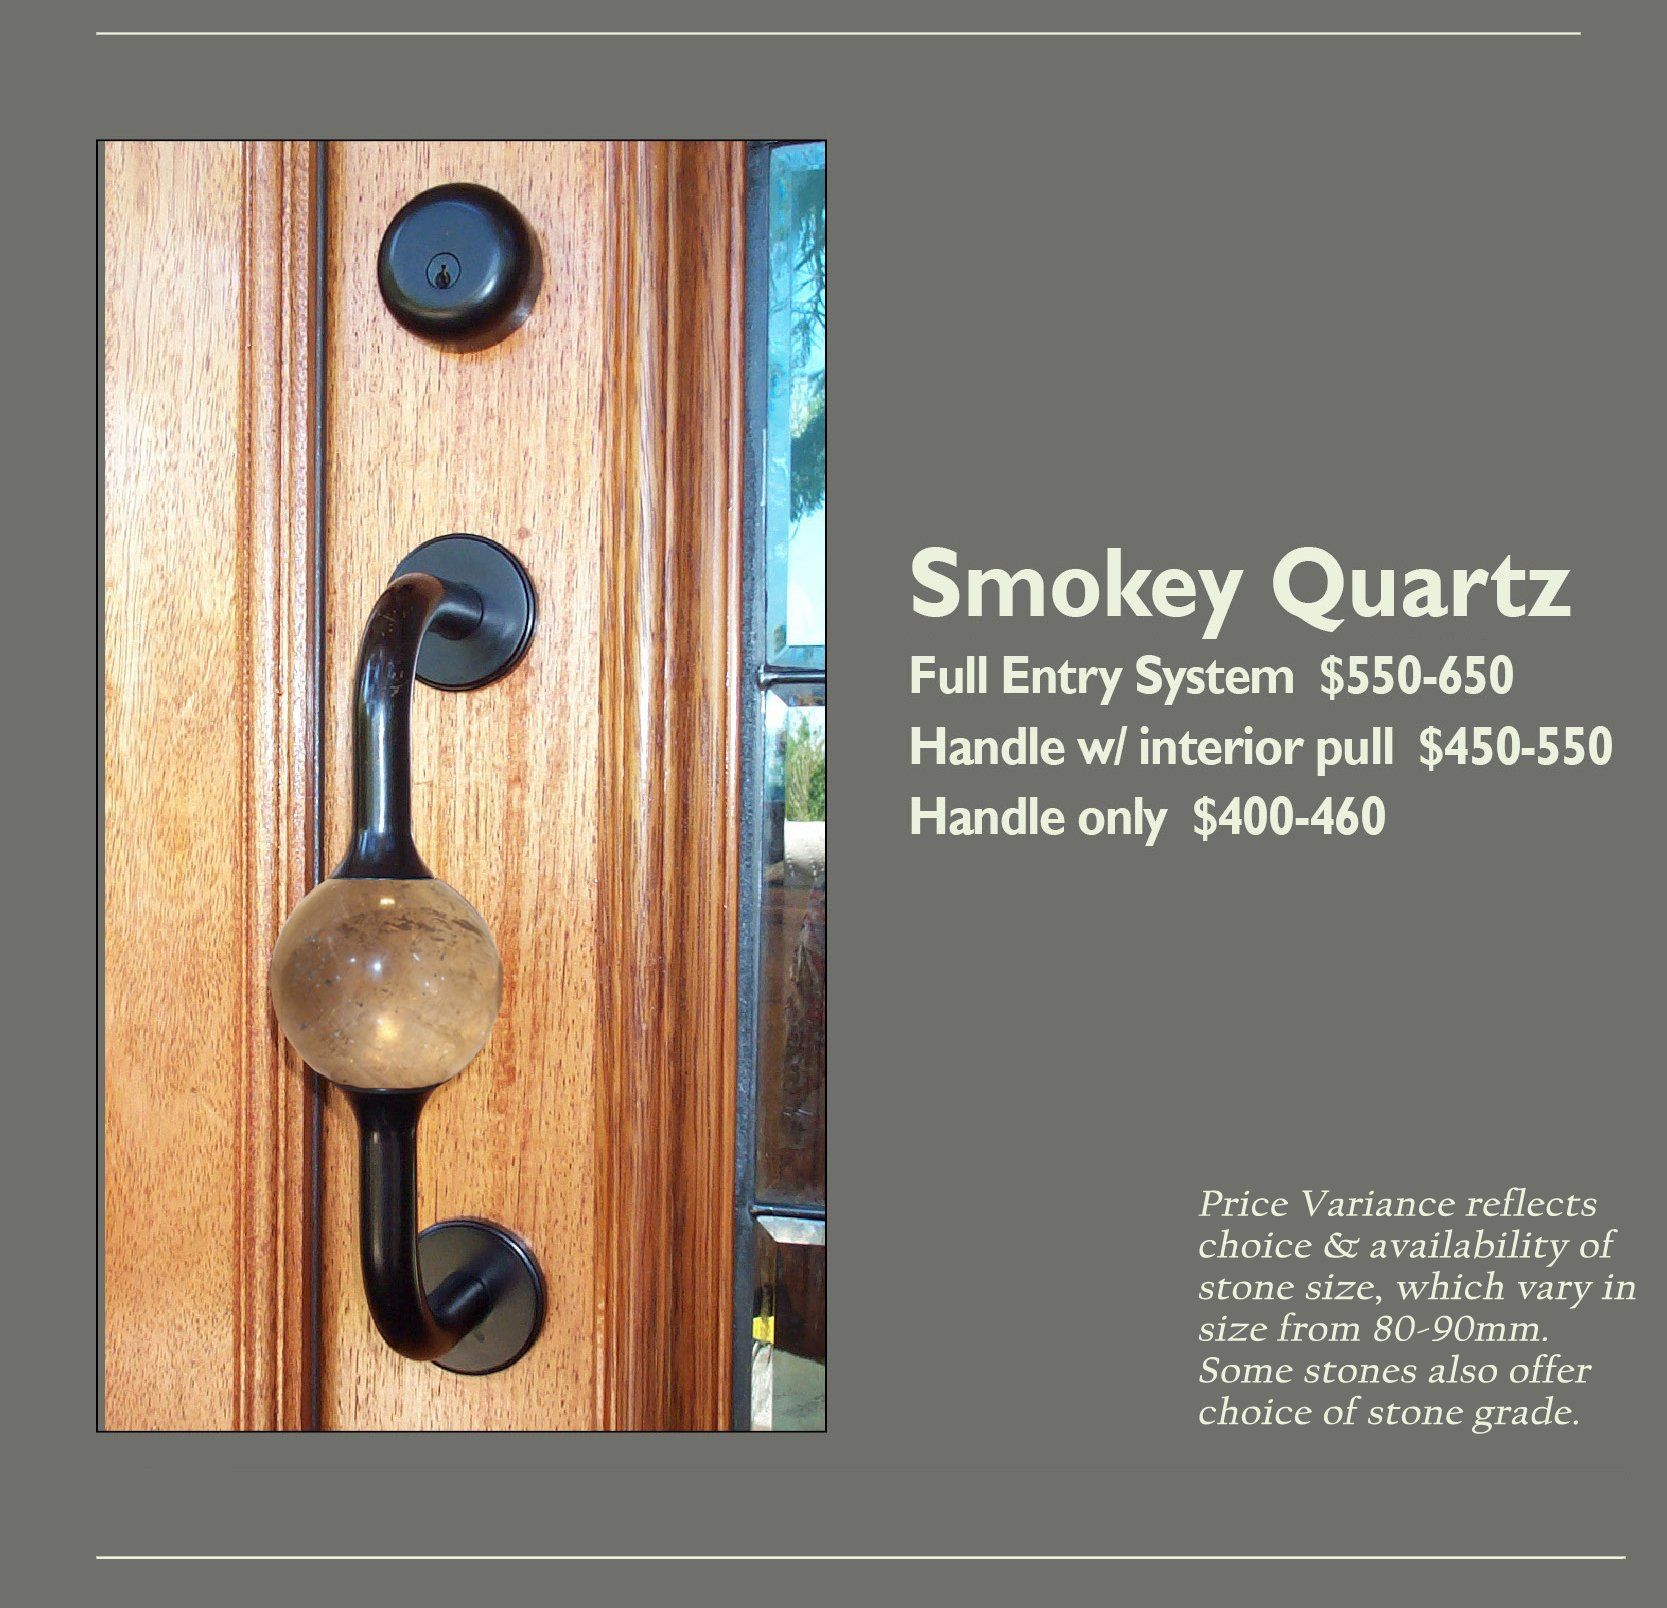 Smokey Quartz Entry Knob Options